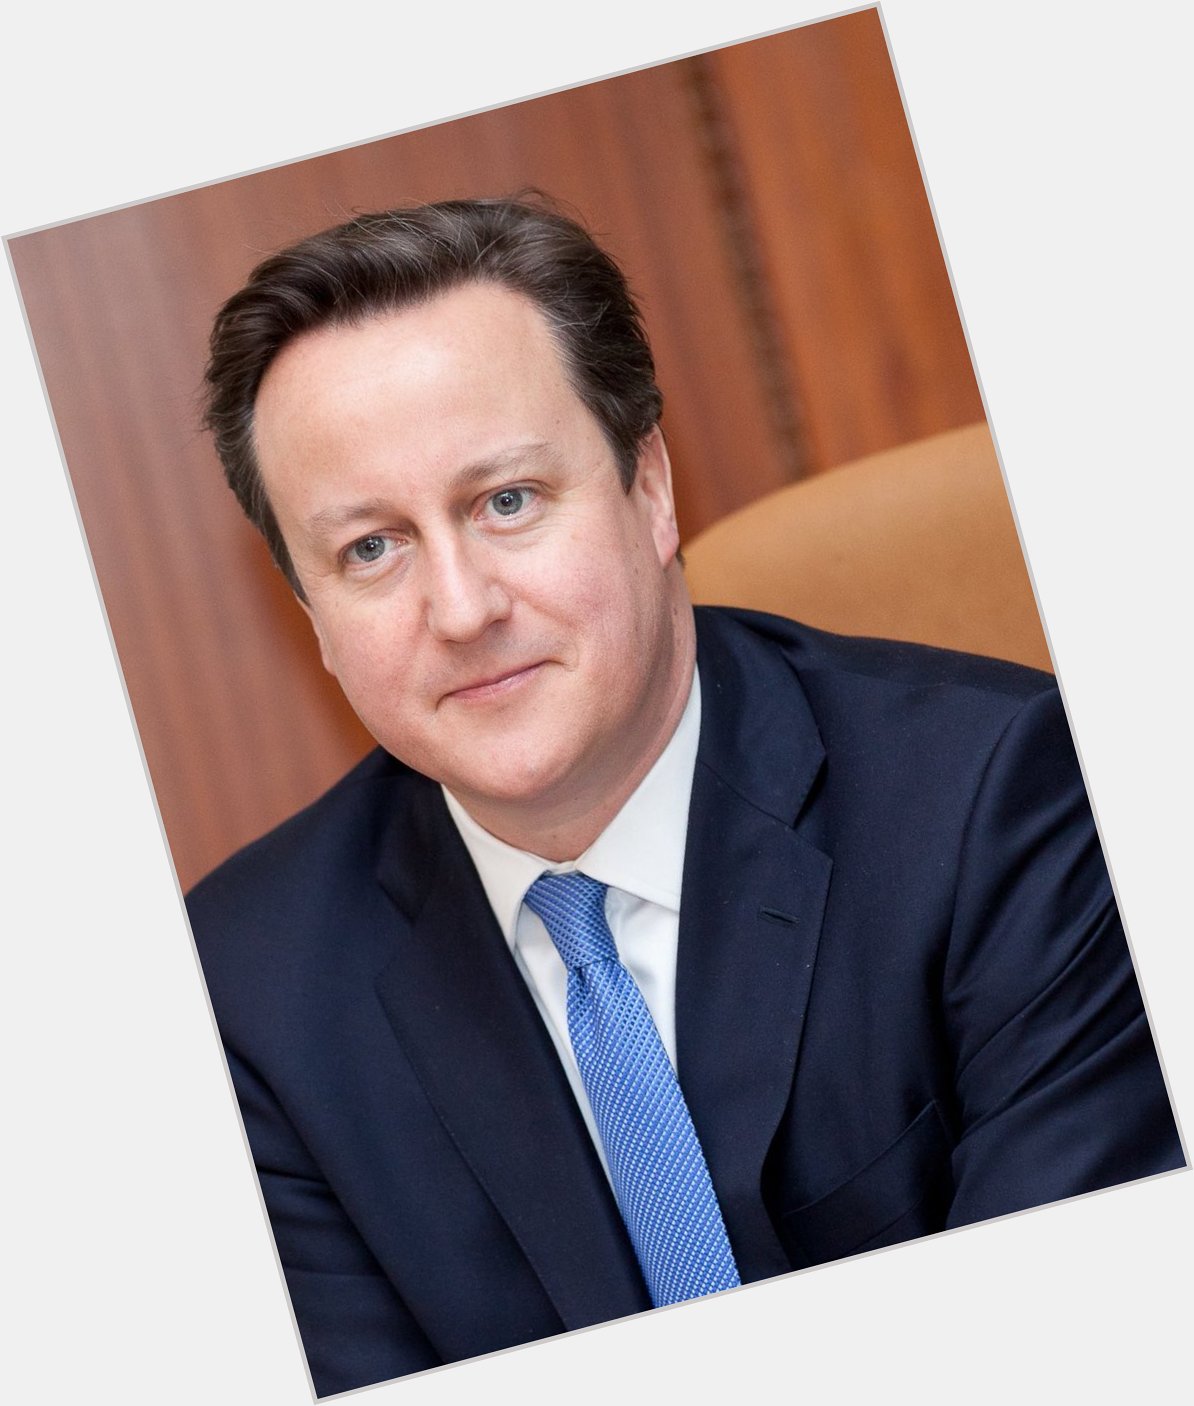 Happy birthday Prime Minister David Cameron!  